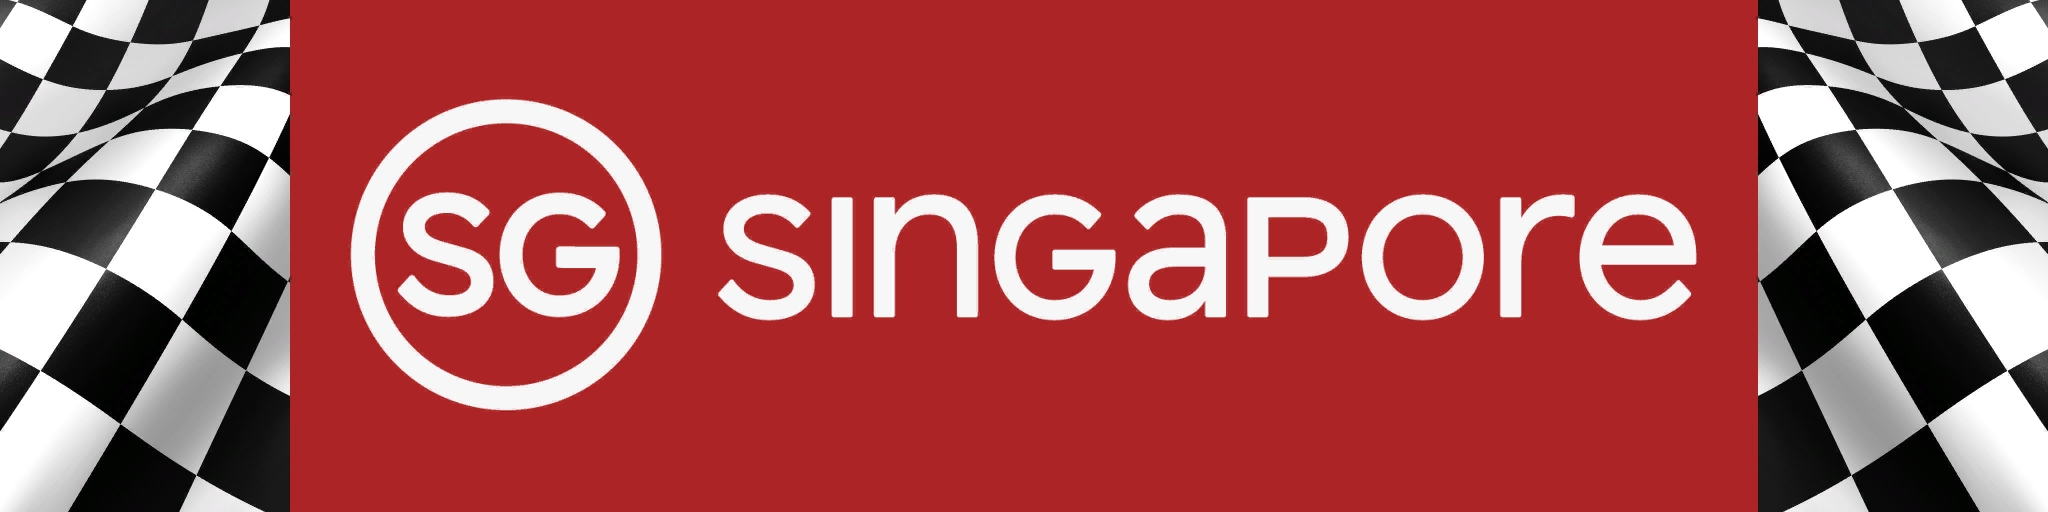 2017_singapore_board_a.jpg